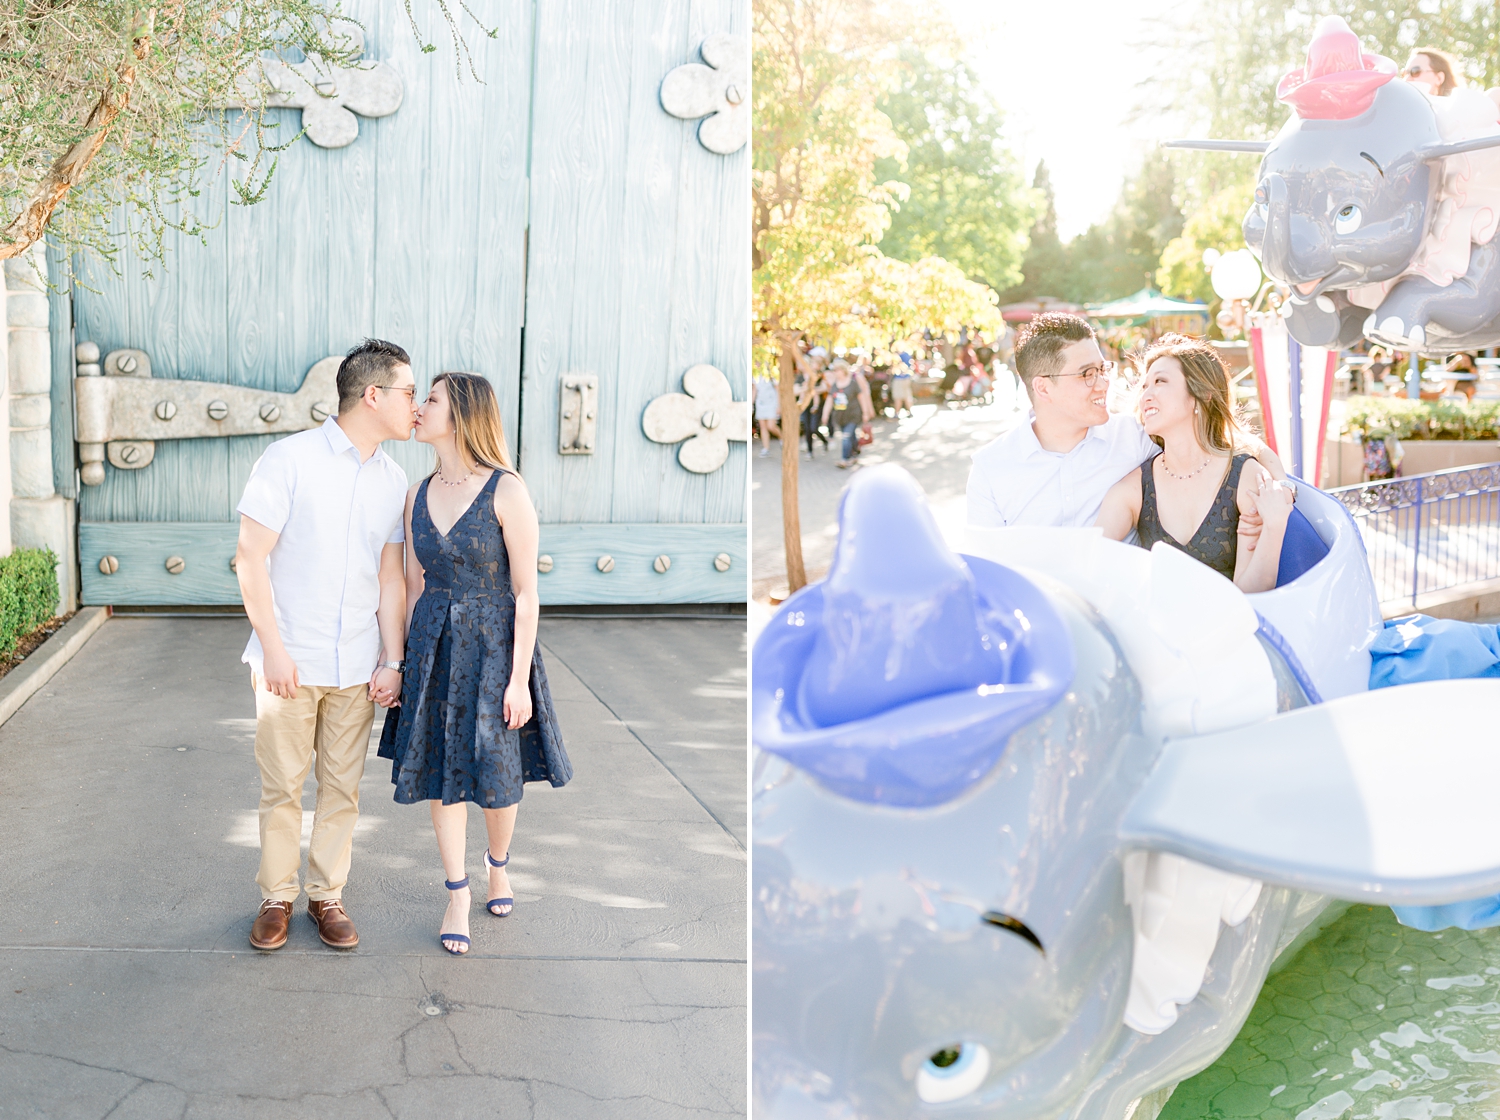 Engaged Couple take photos at Disneyland for engagement photos